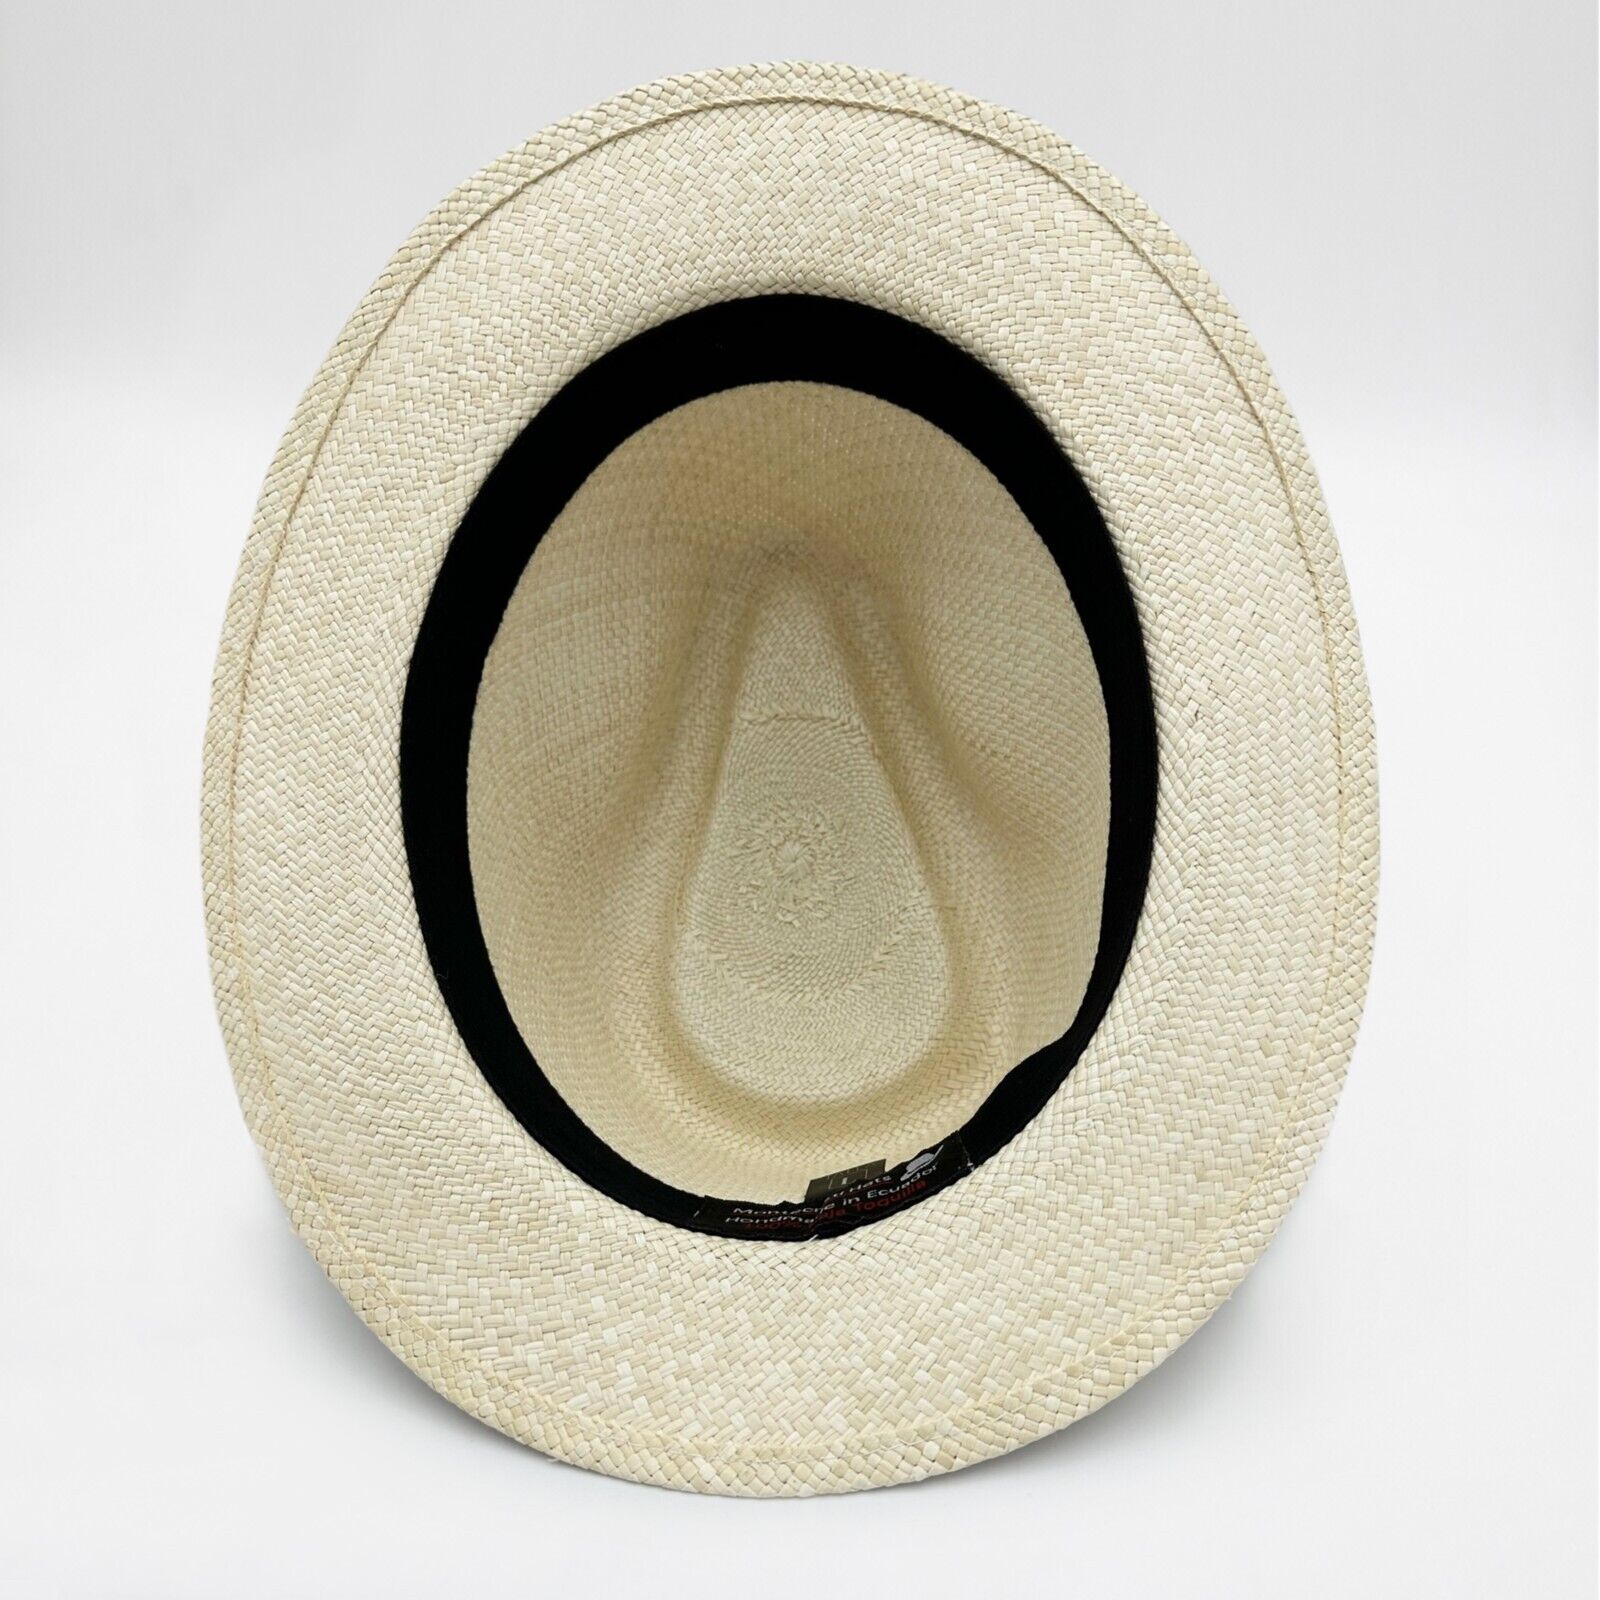 Genuine Trilby Fedora Panama Hat Handwoven In Ecuador - Short Brim - Light